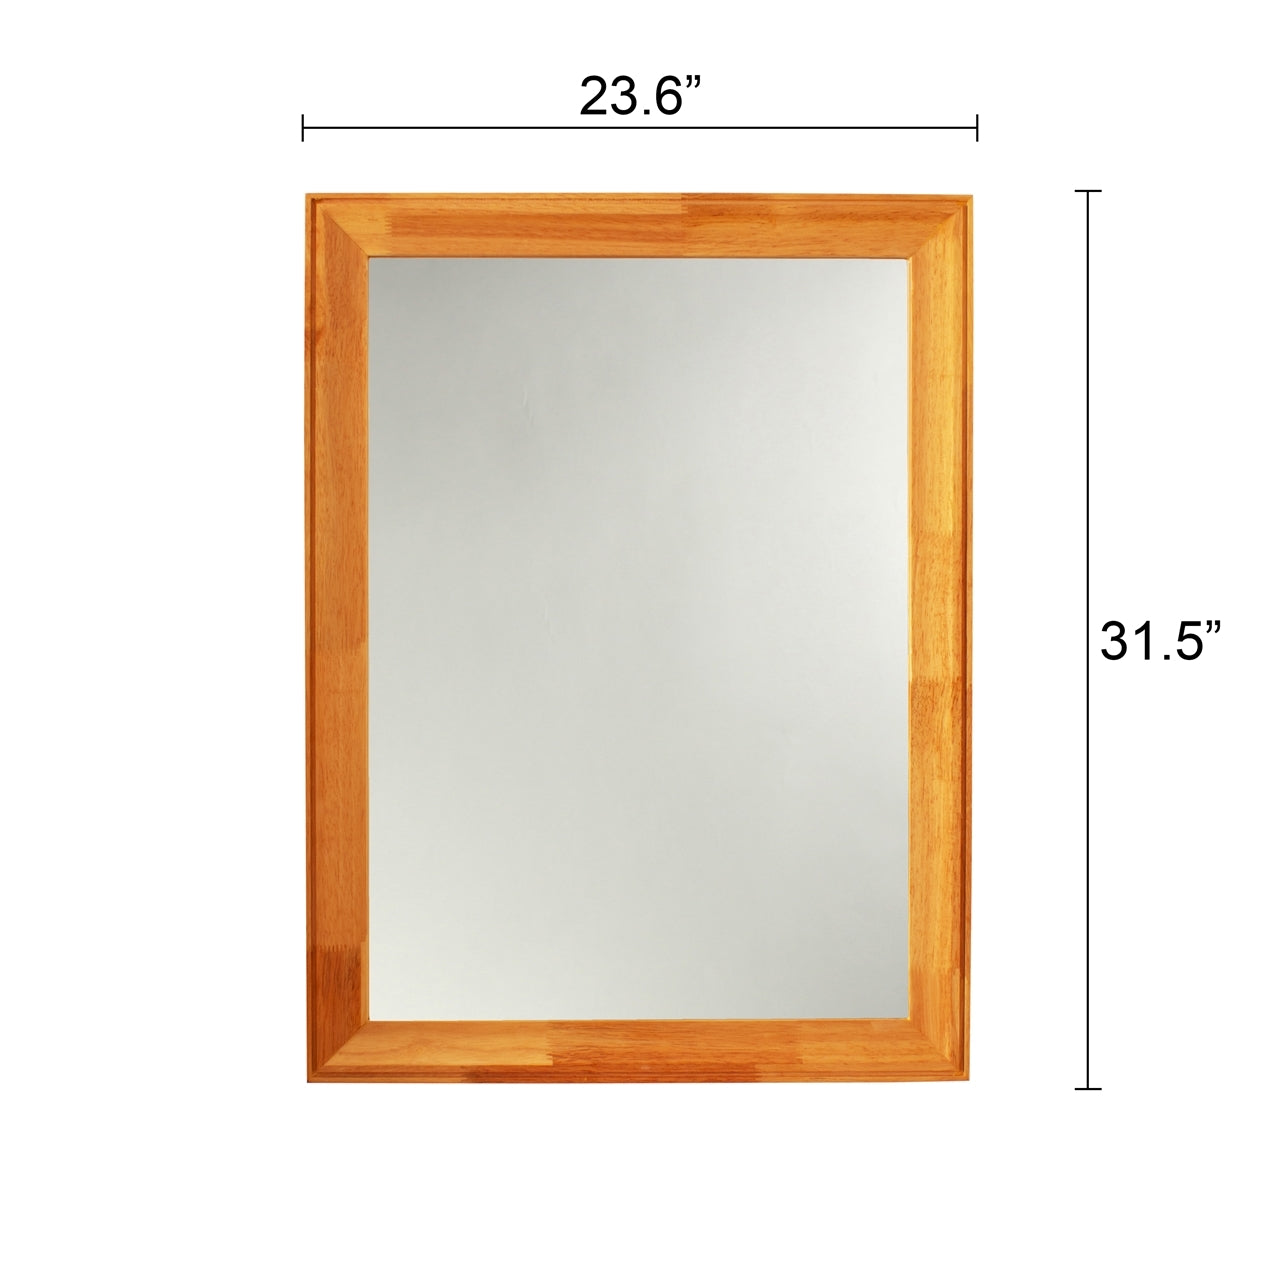 Reflection Maple Finish Rectangular Framed Wall Mirror 32" Height